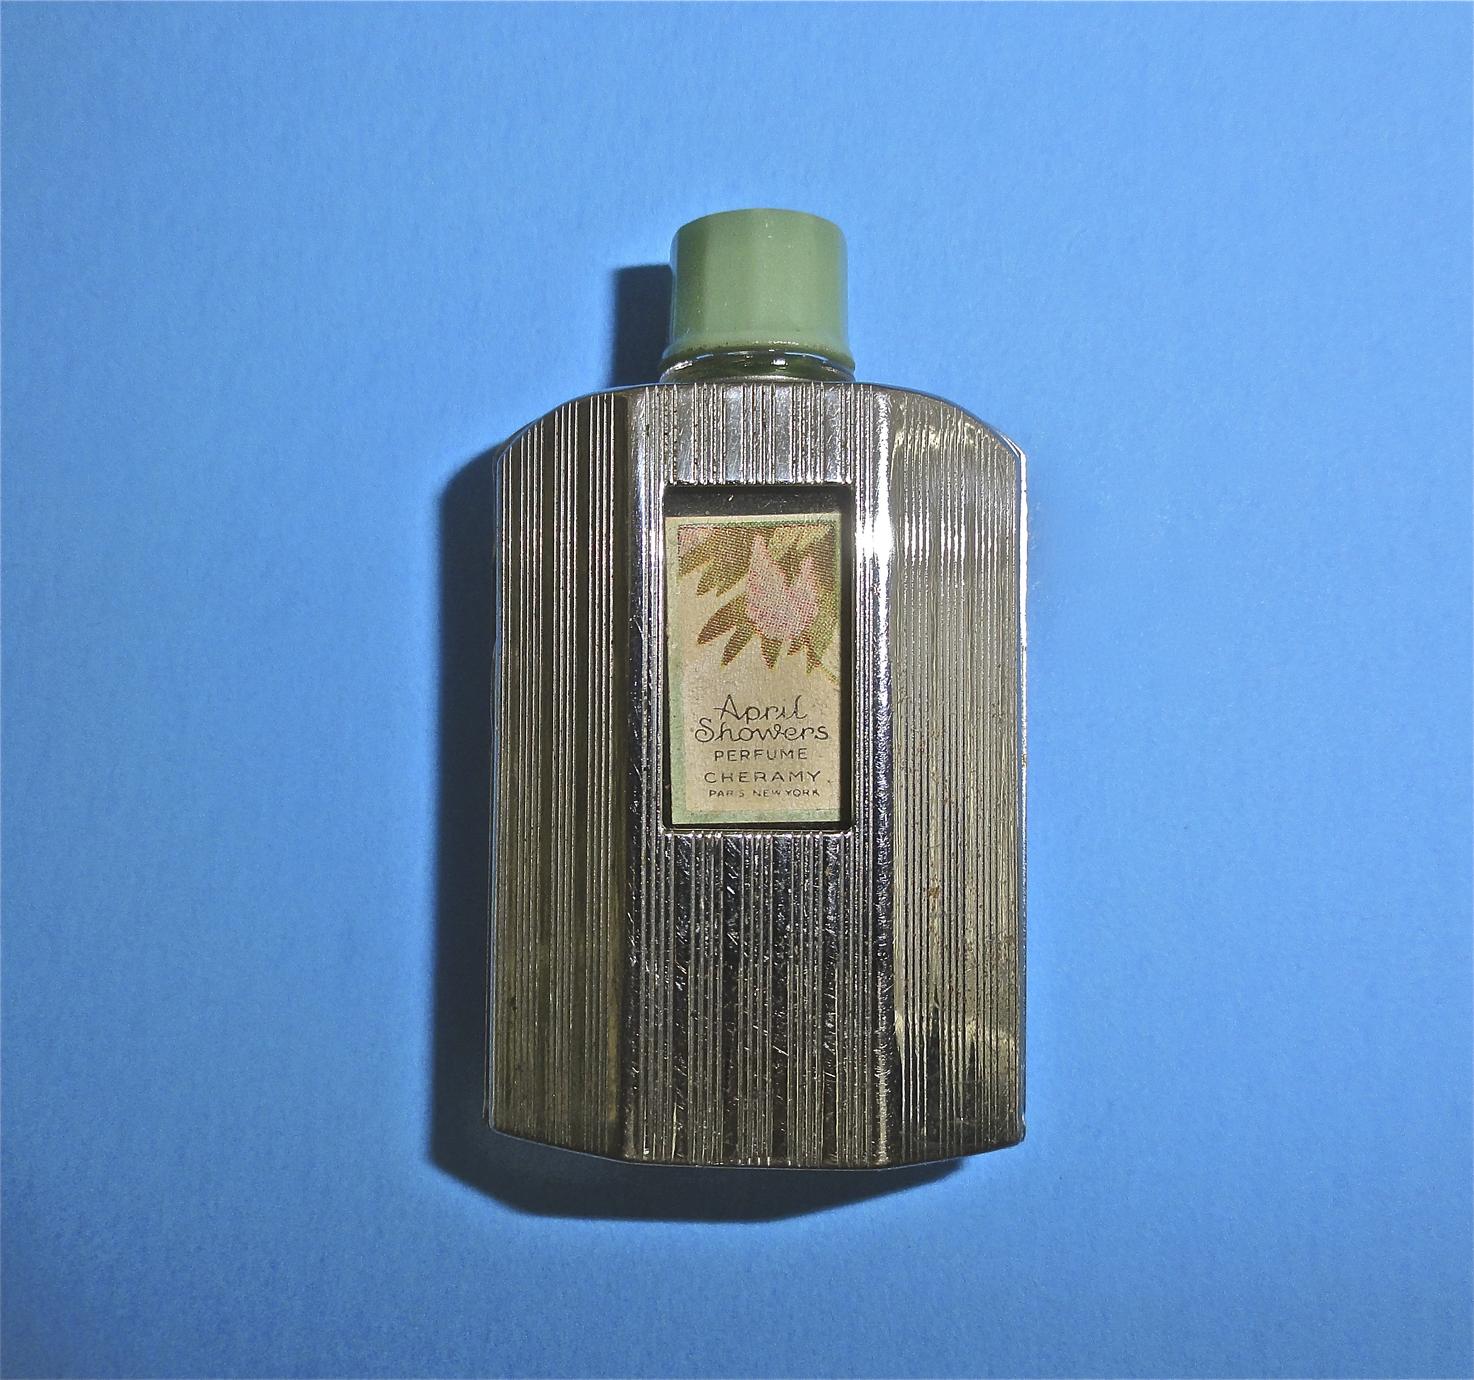 Cheramy "April Showers" perfume bottle (1 of 2)